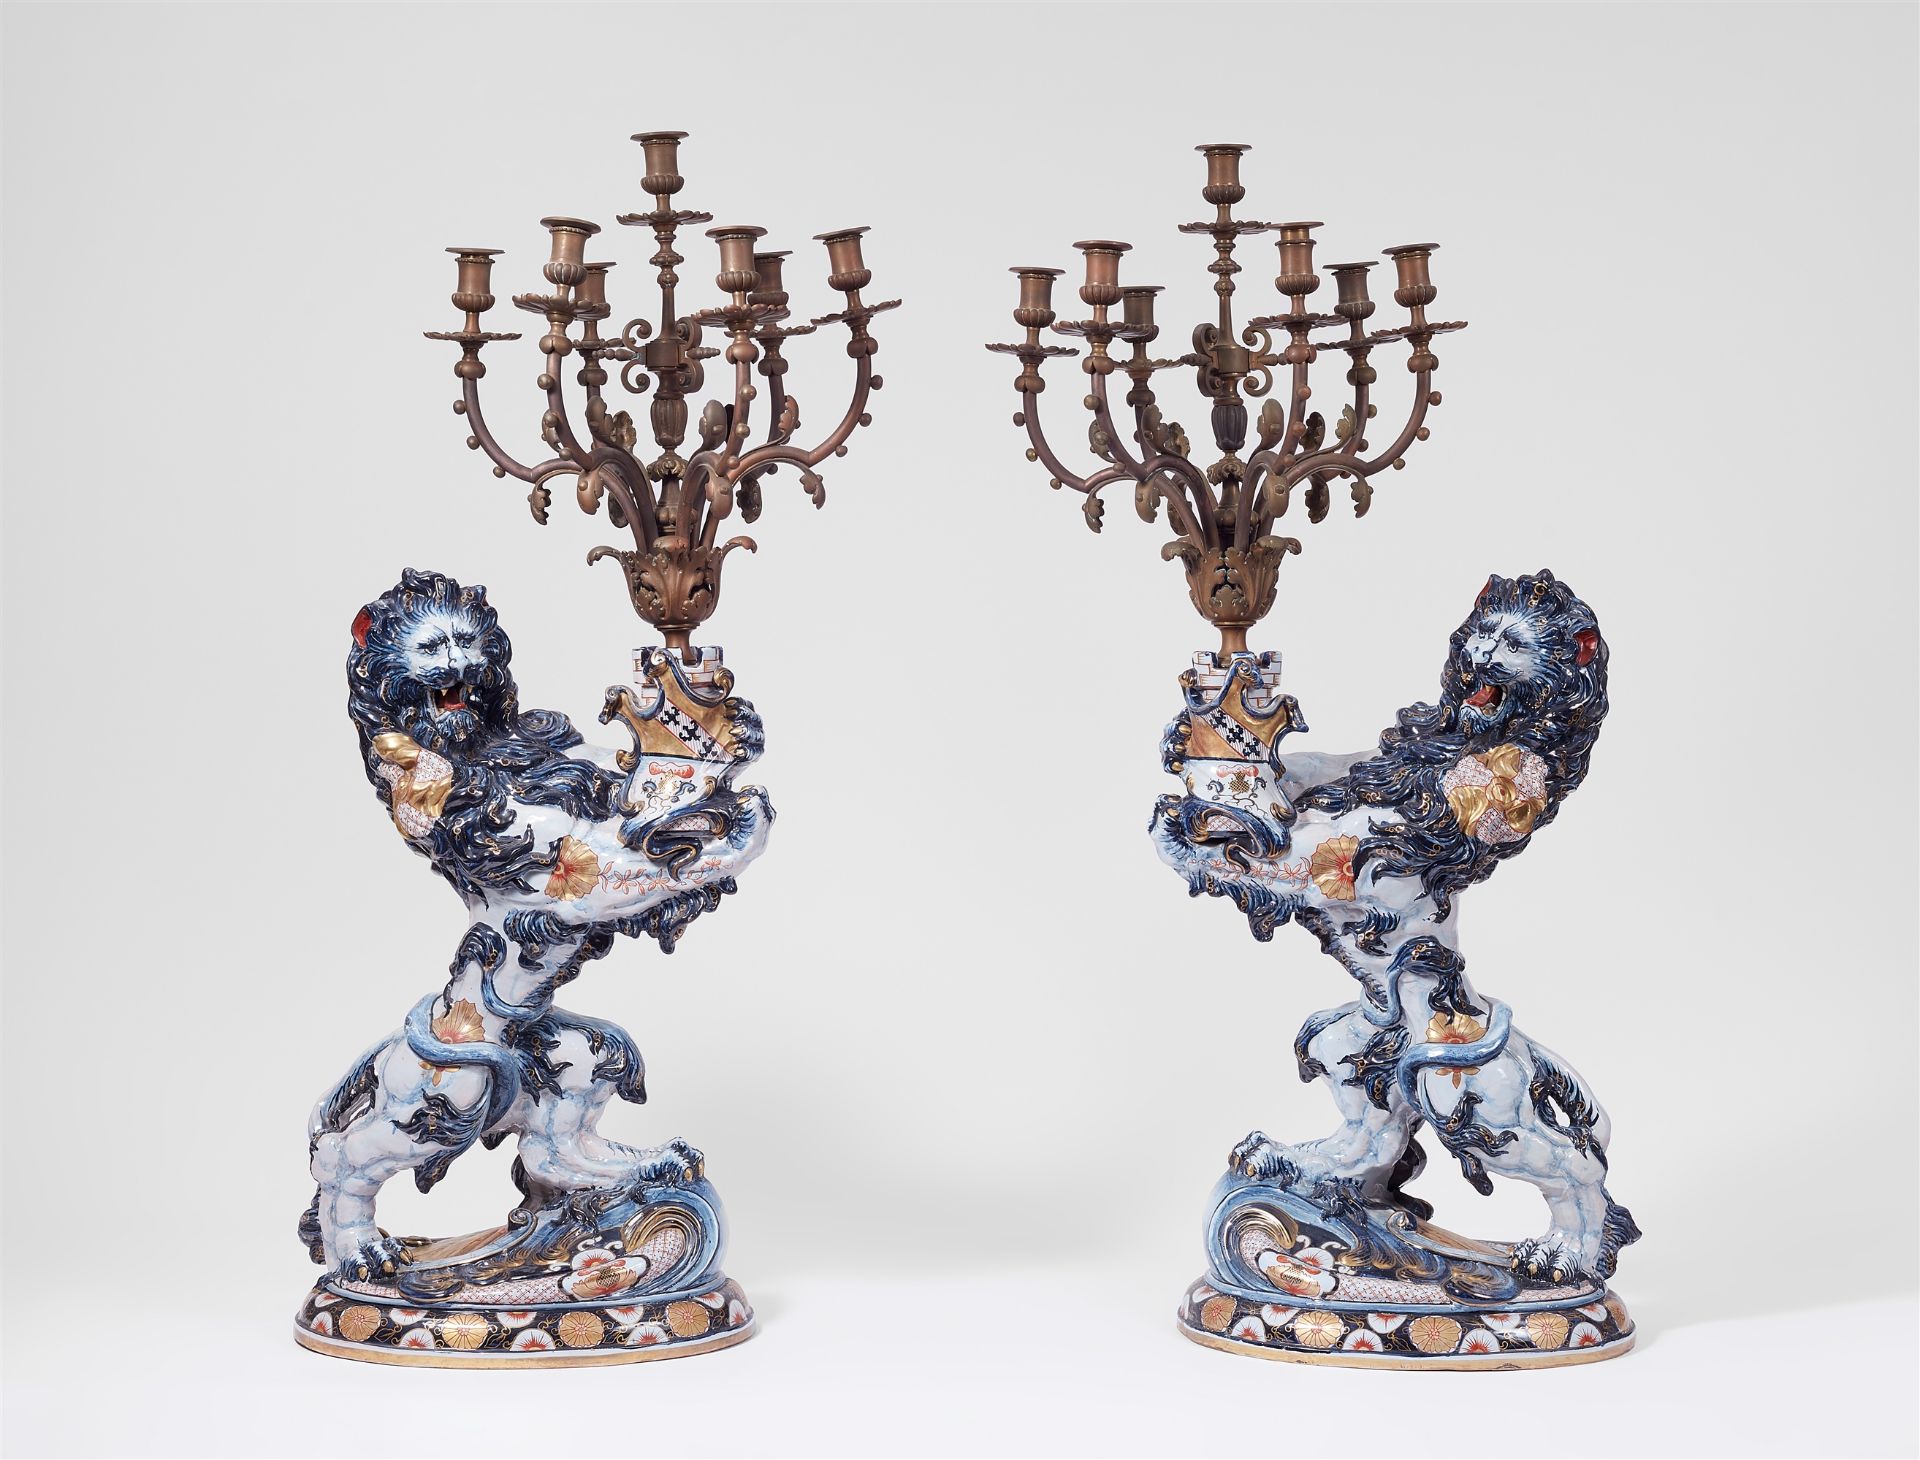 A pair of lion candelabra, large models, by Emile Gallé